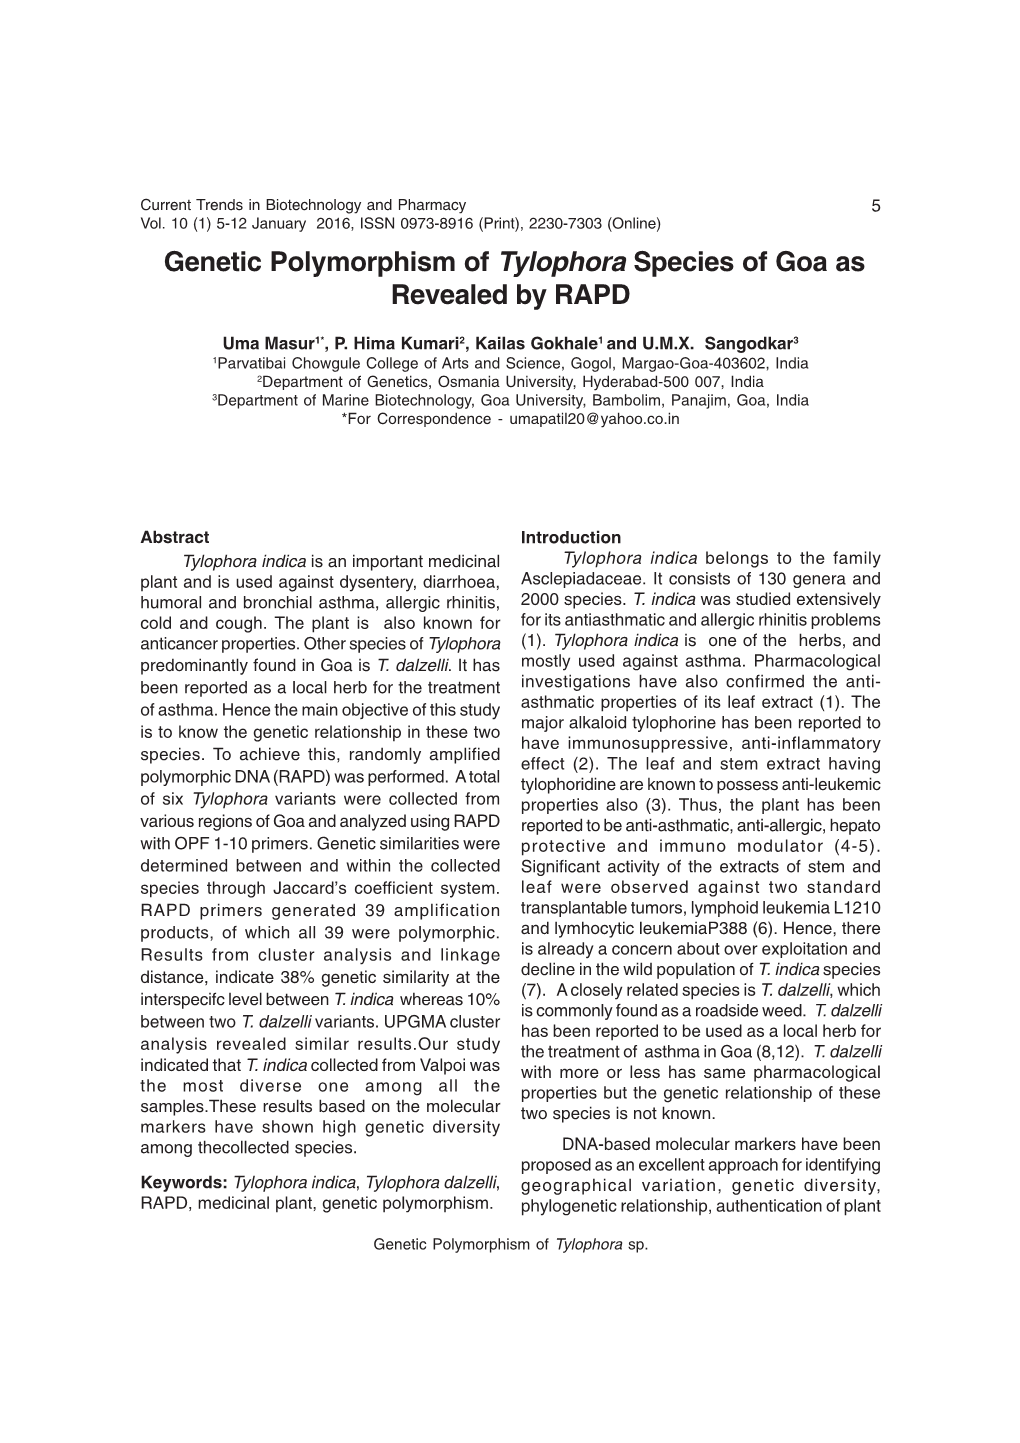 Genetic Polymorphism of Tylophora Species of Goa As Revealed by RAPD